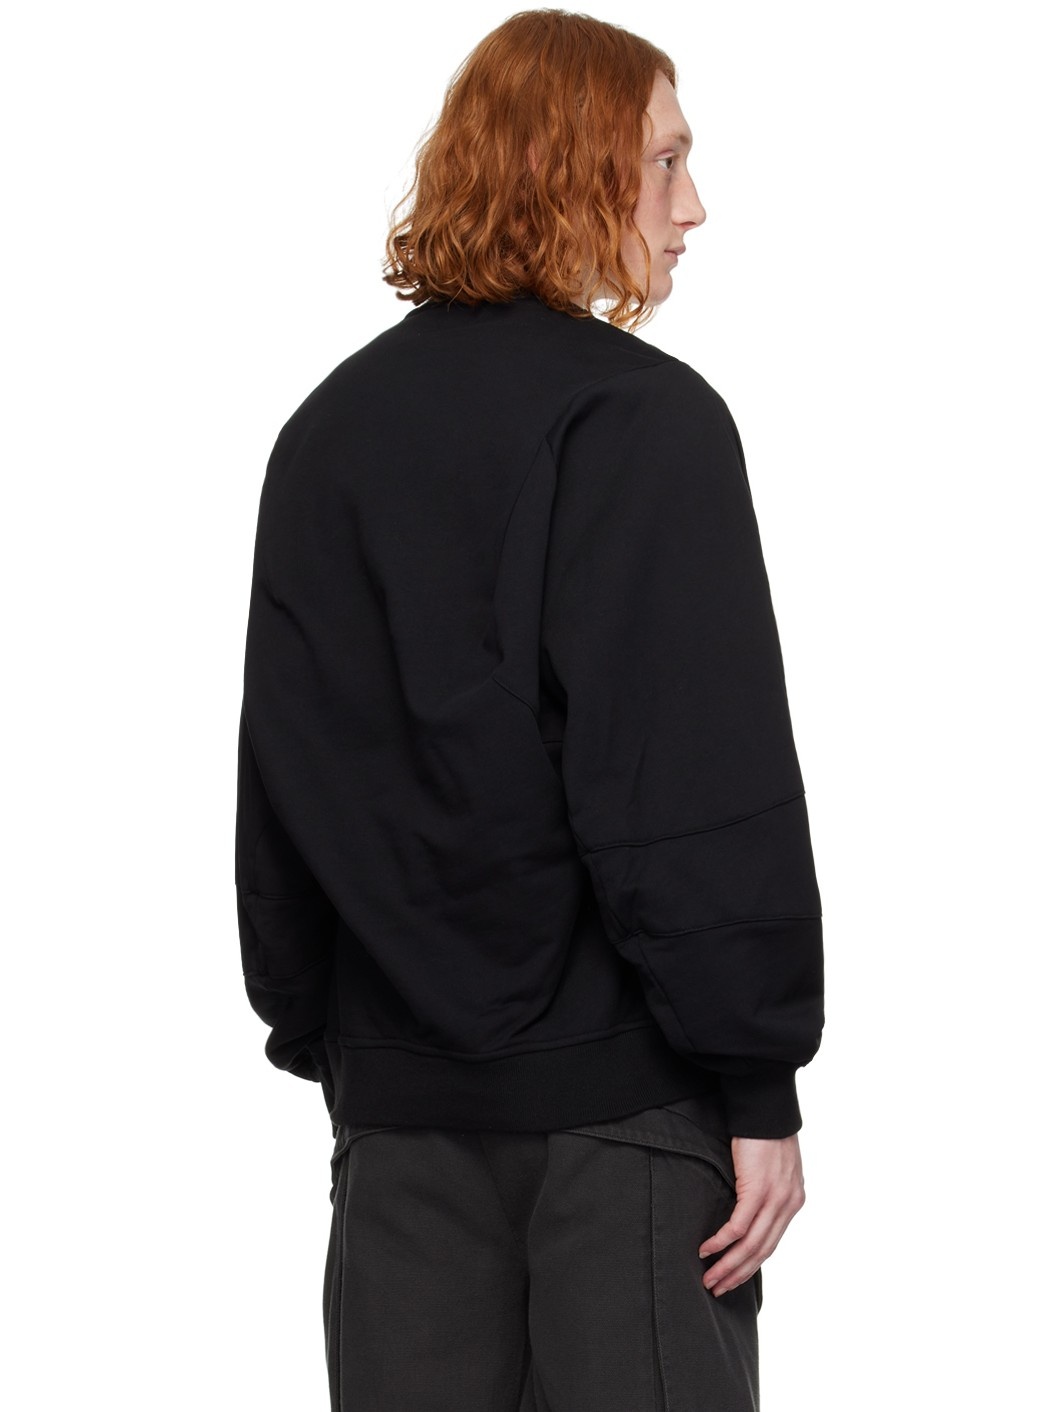 Black Plicate Sweatshirt - 3